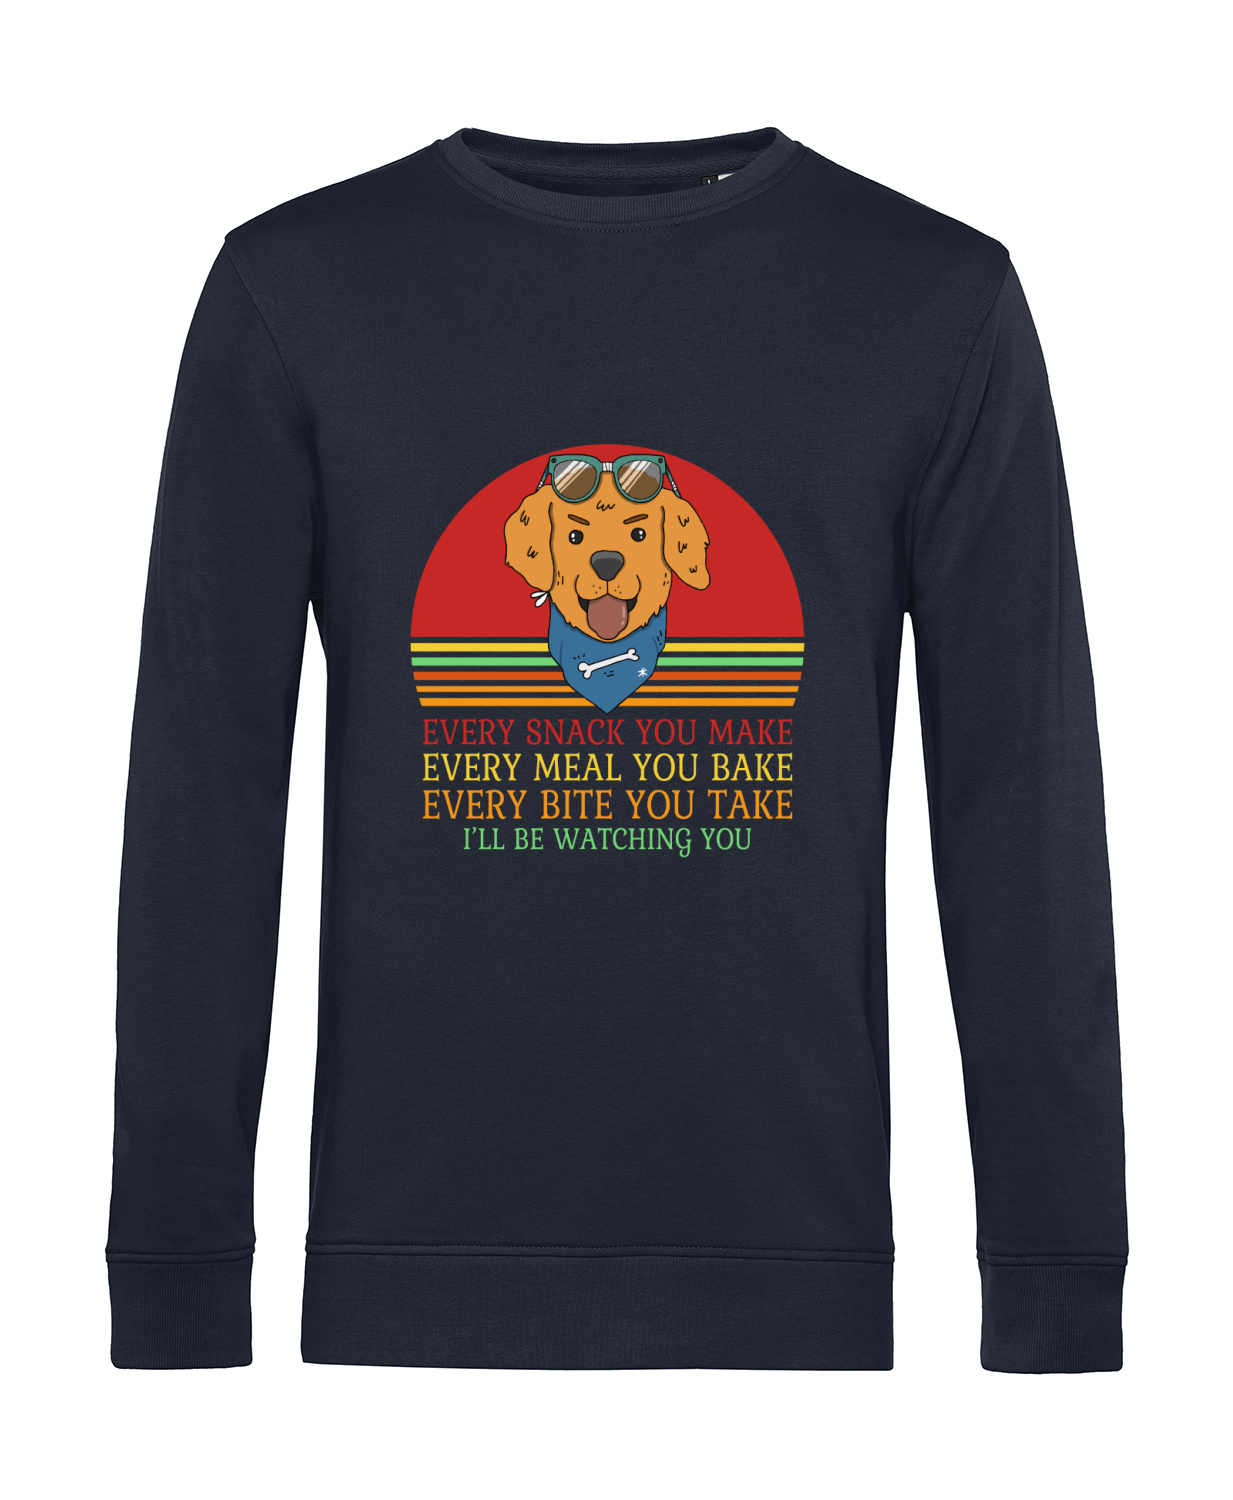 Nachhaltiges Sweatshirt Herren Hunde - Every Snack You Make